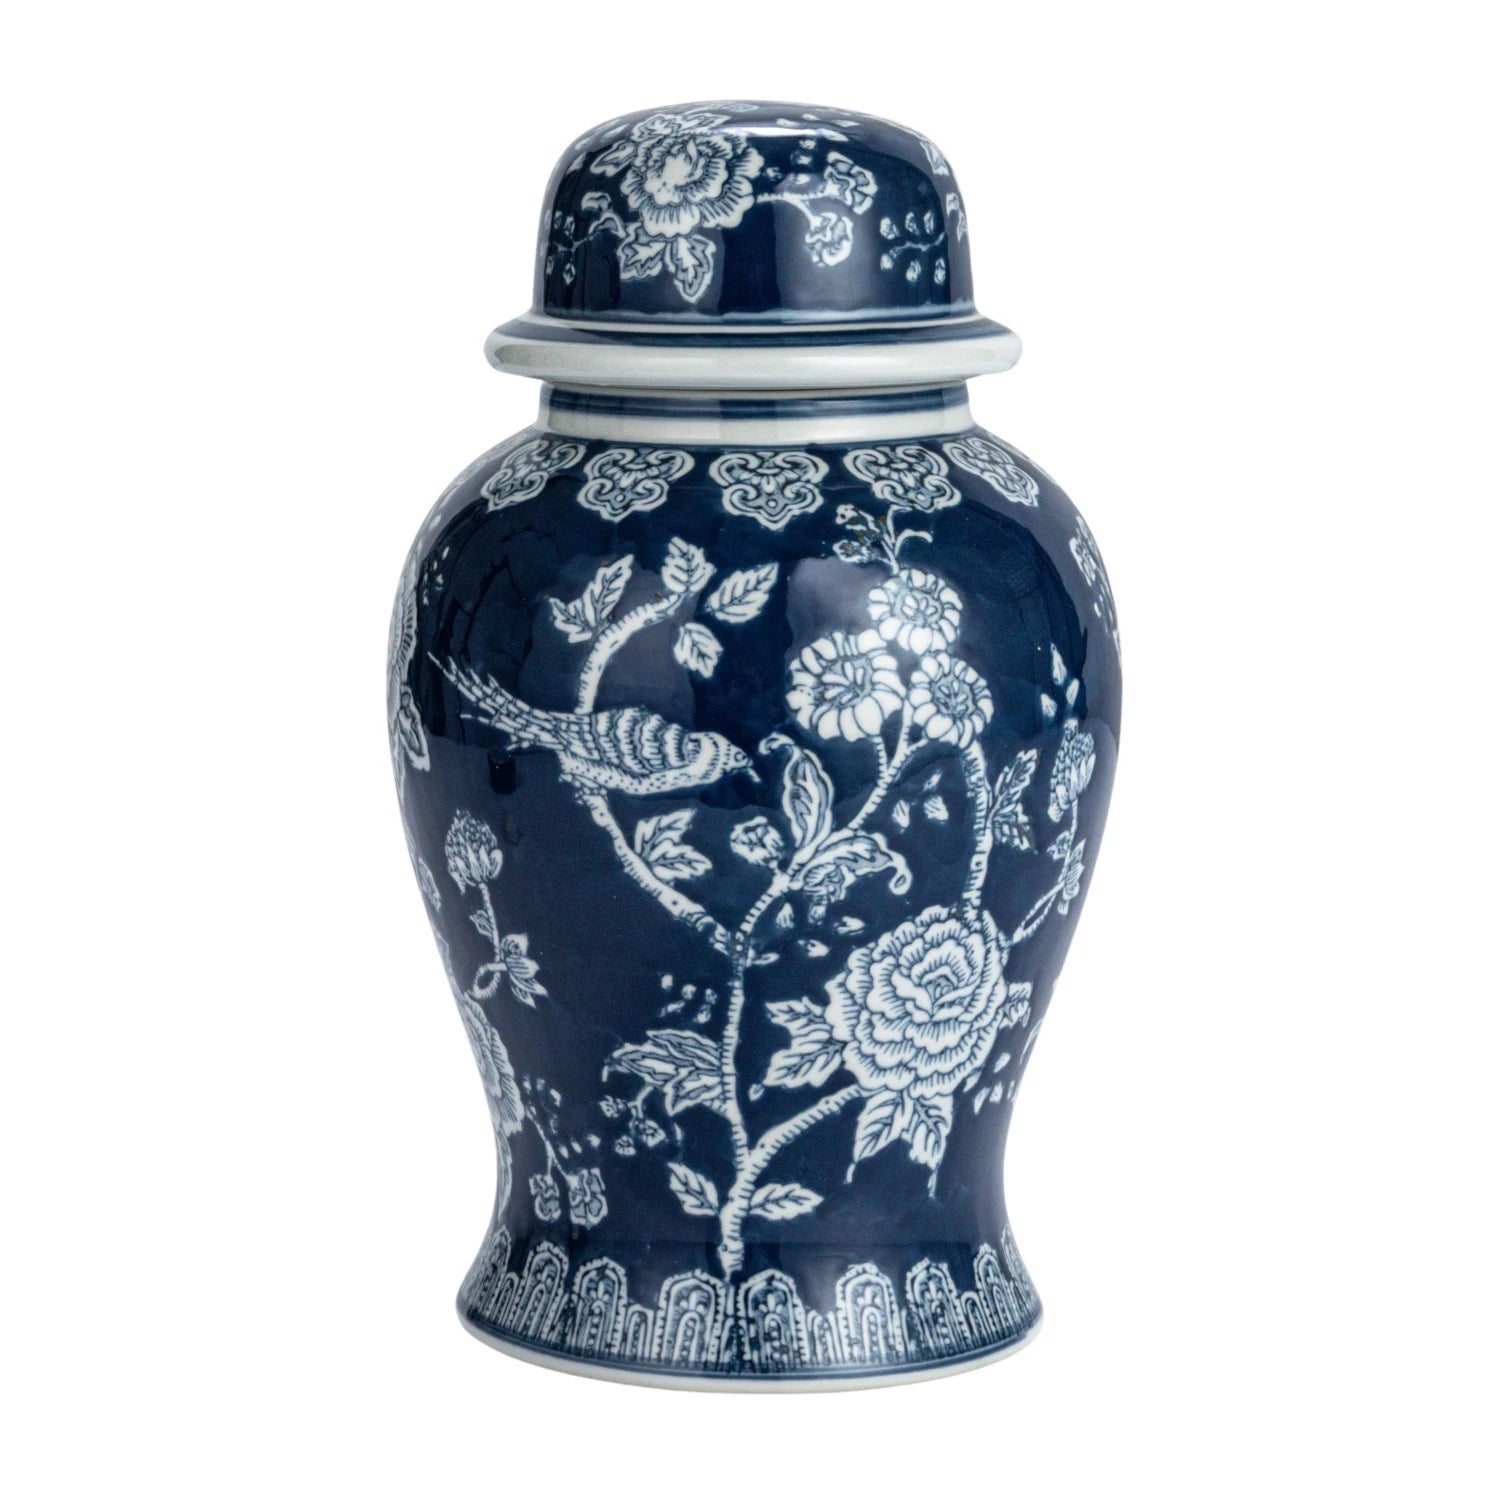 Decorative Hand-Painted Ceramic Ginger Jar